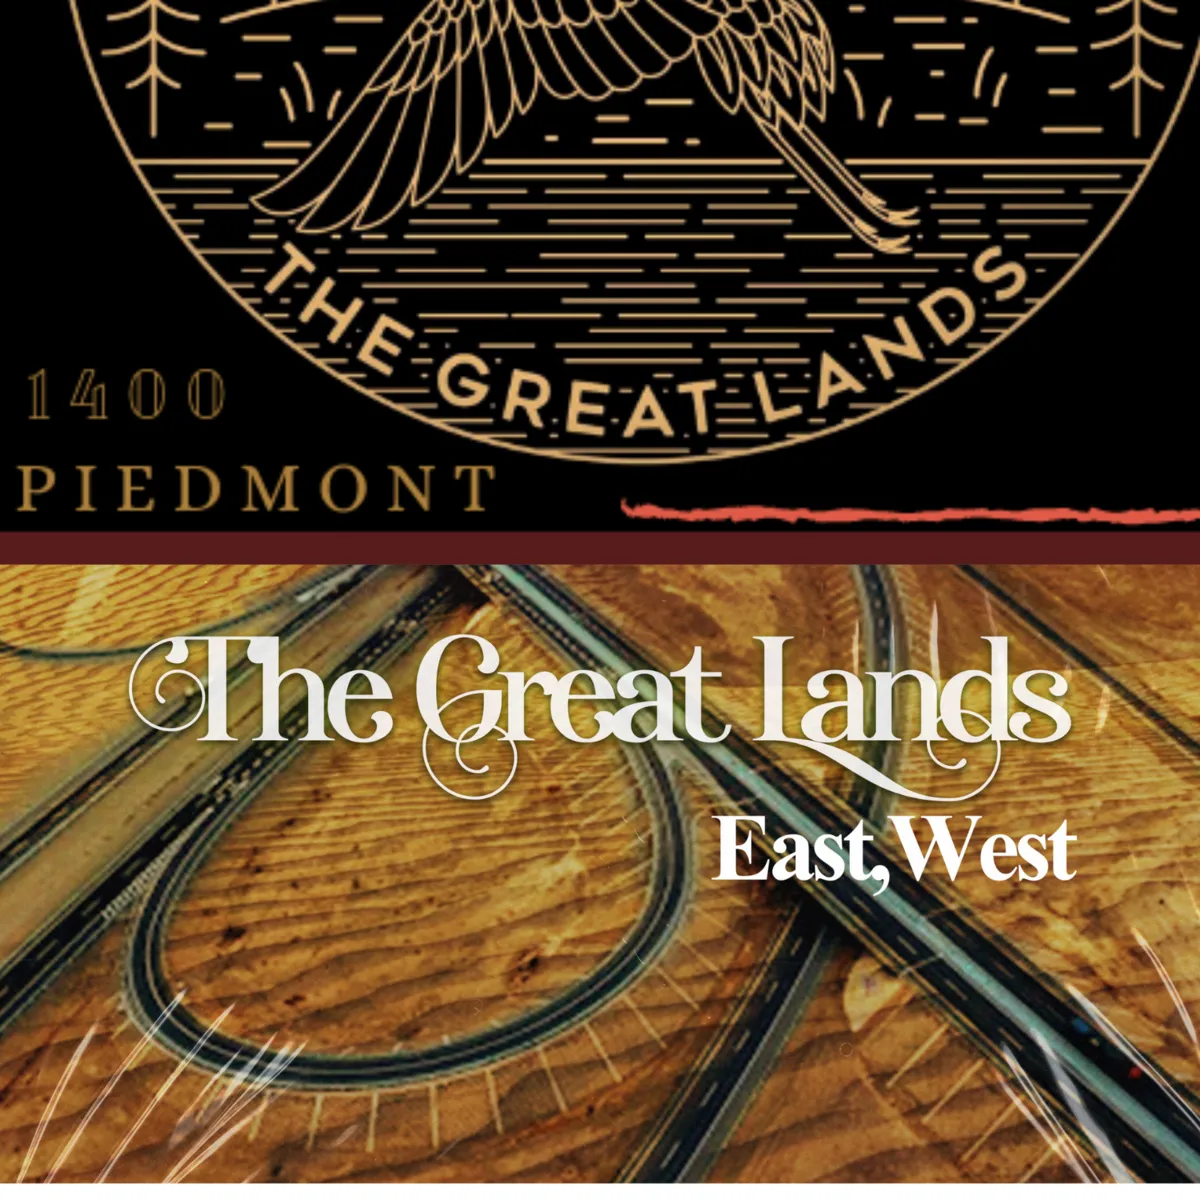 1400 Piedmont/East West CD (10 Songs!)